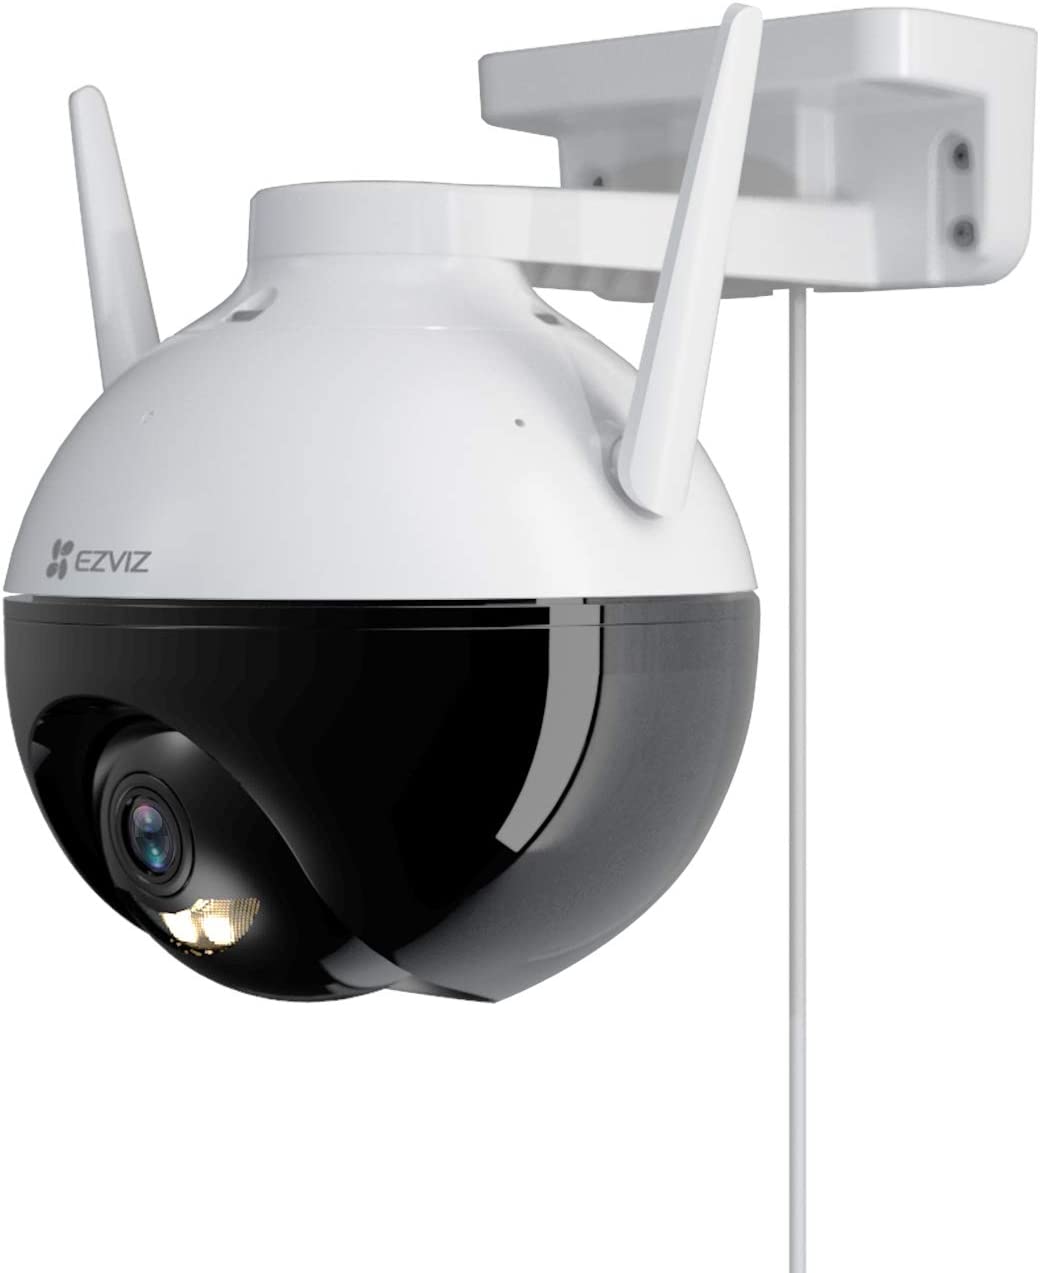 EZVIZ 1080P Wi-Fi Outdoor Security Camera, White - C8C